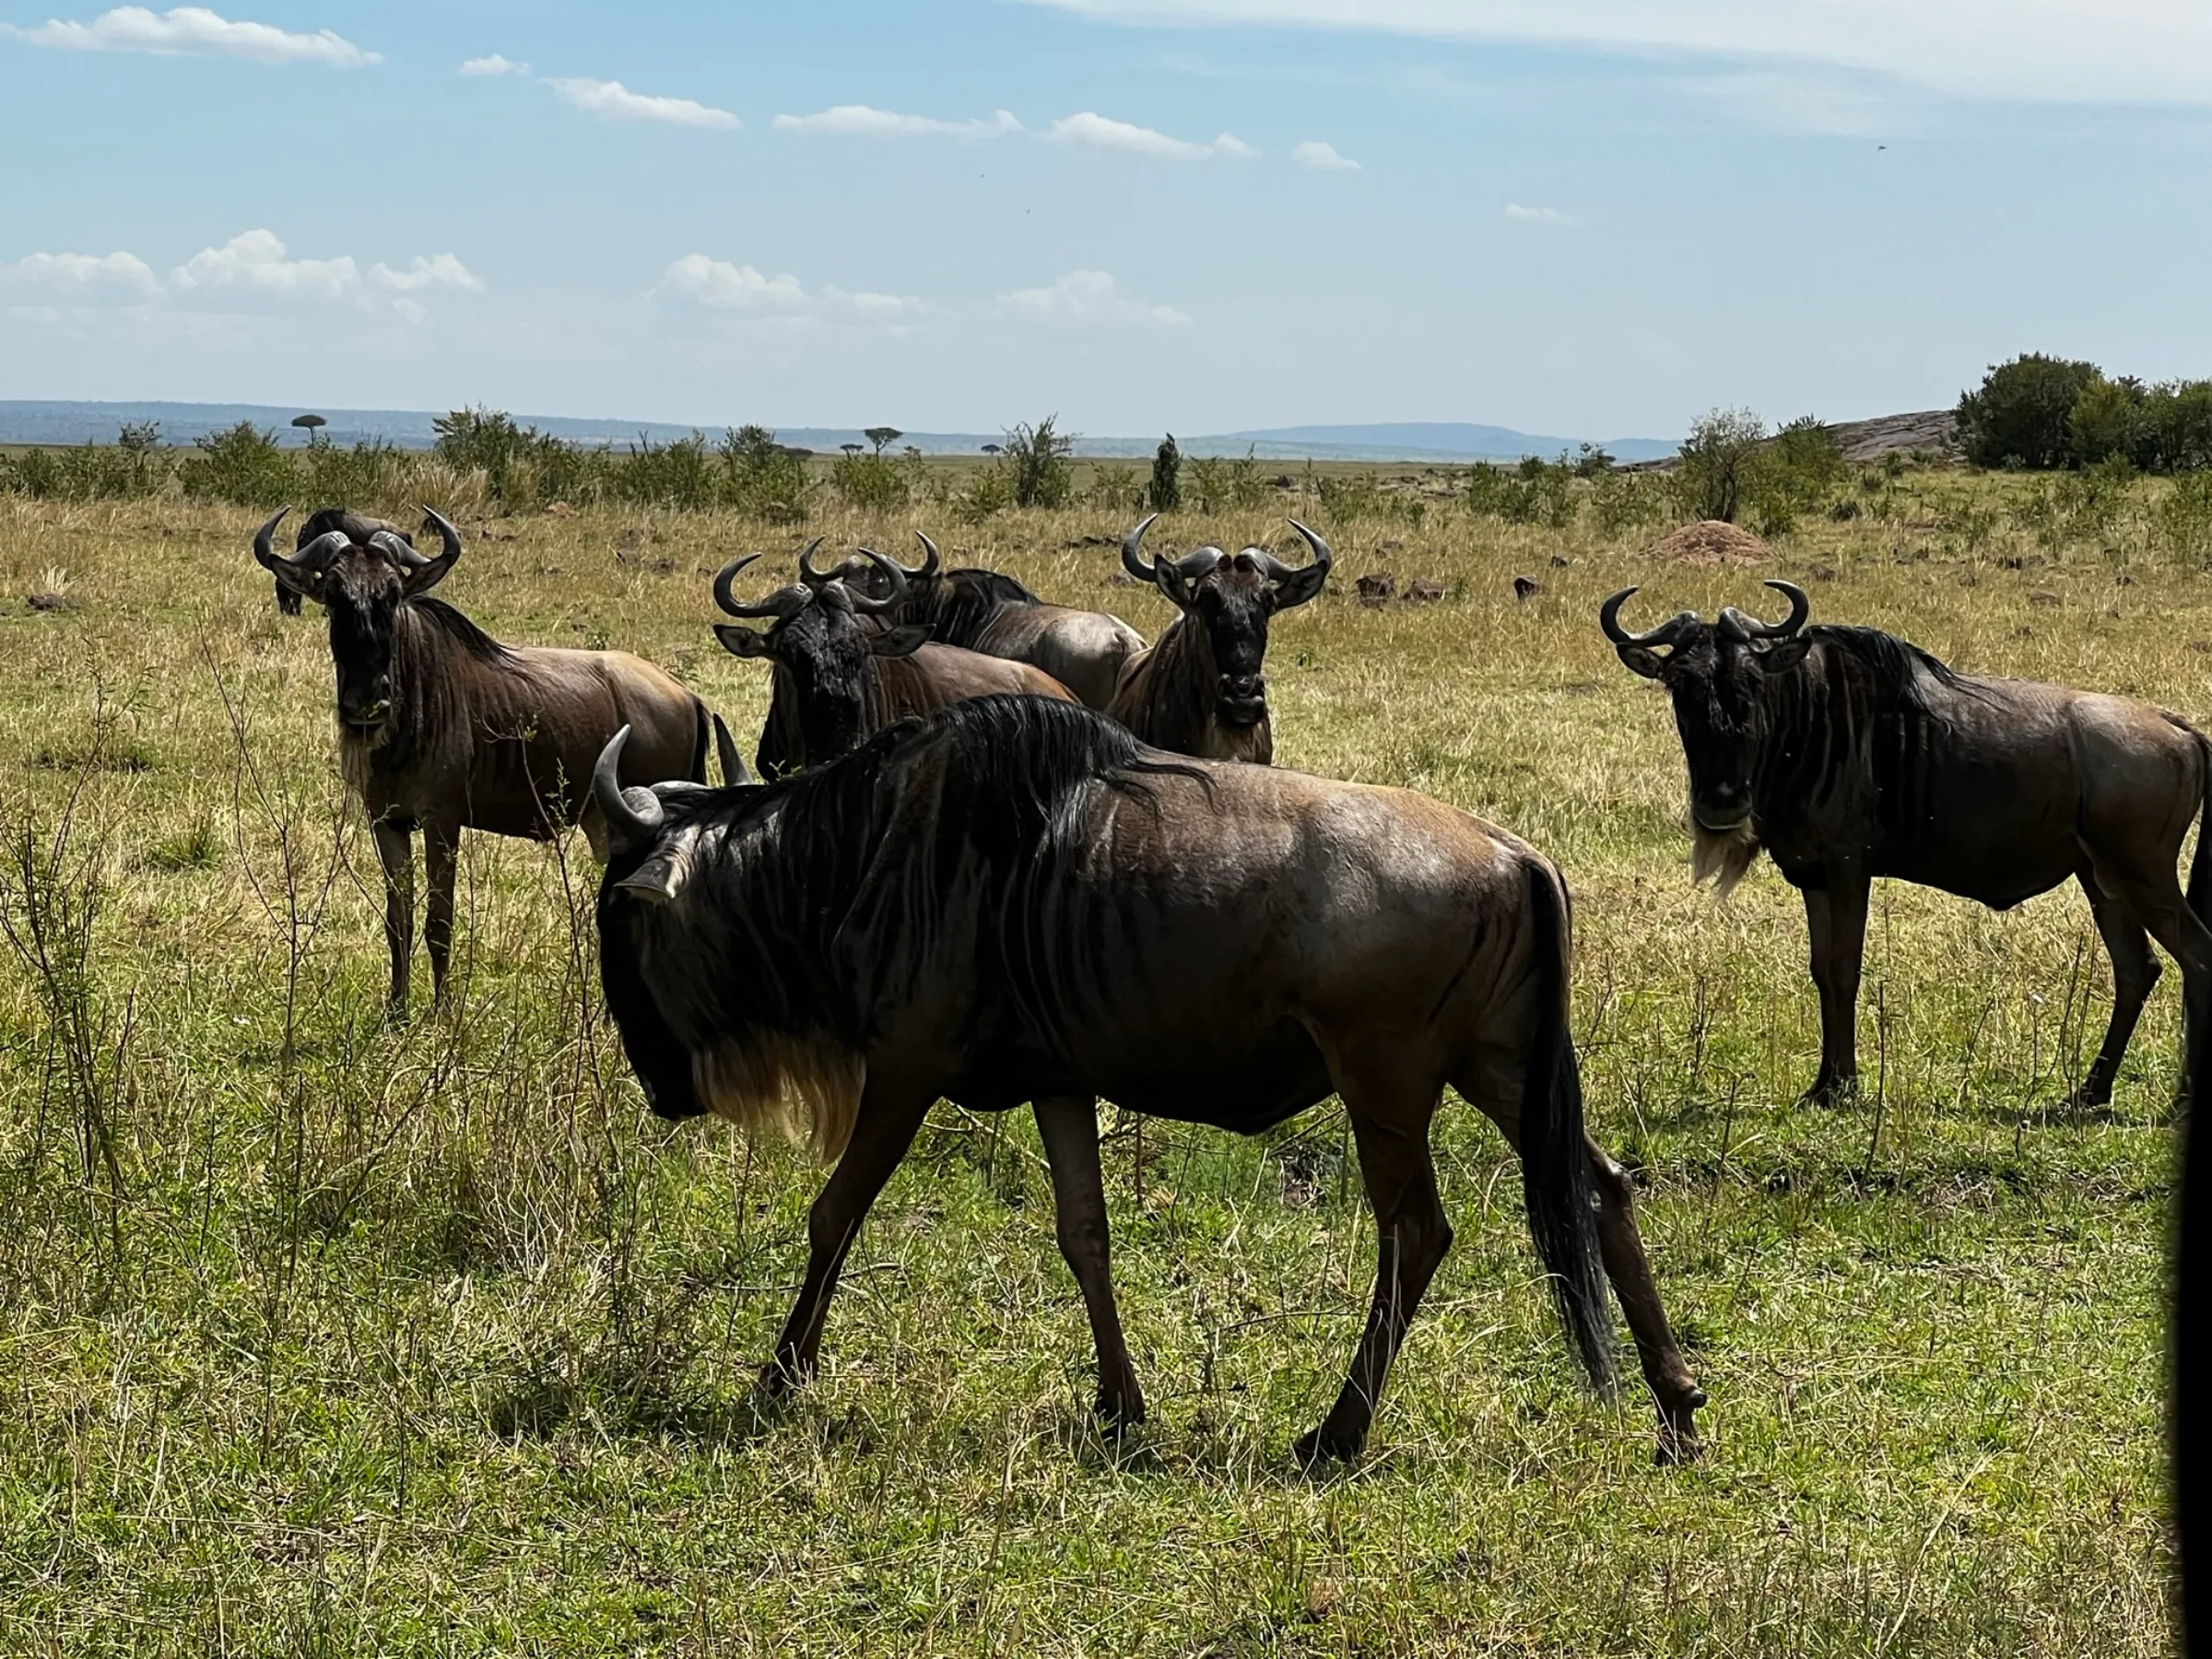 In Kenya, climate change shrinks Maasai Mara wildebeest migration | Context